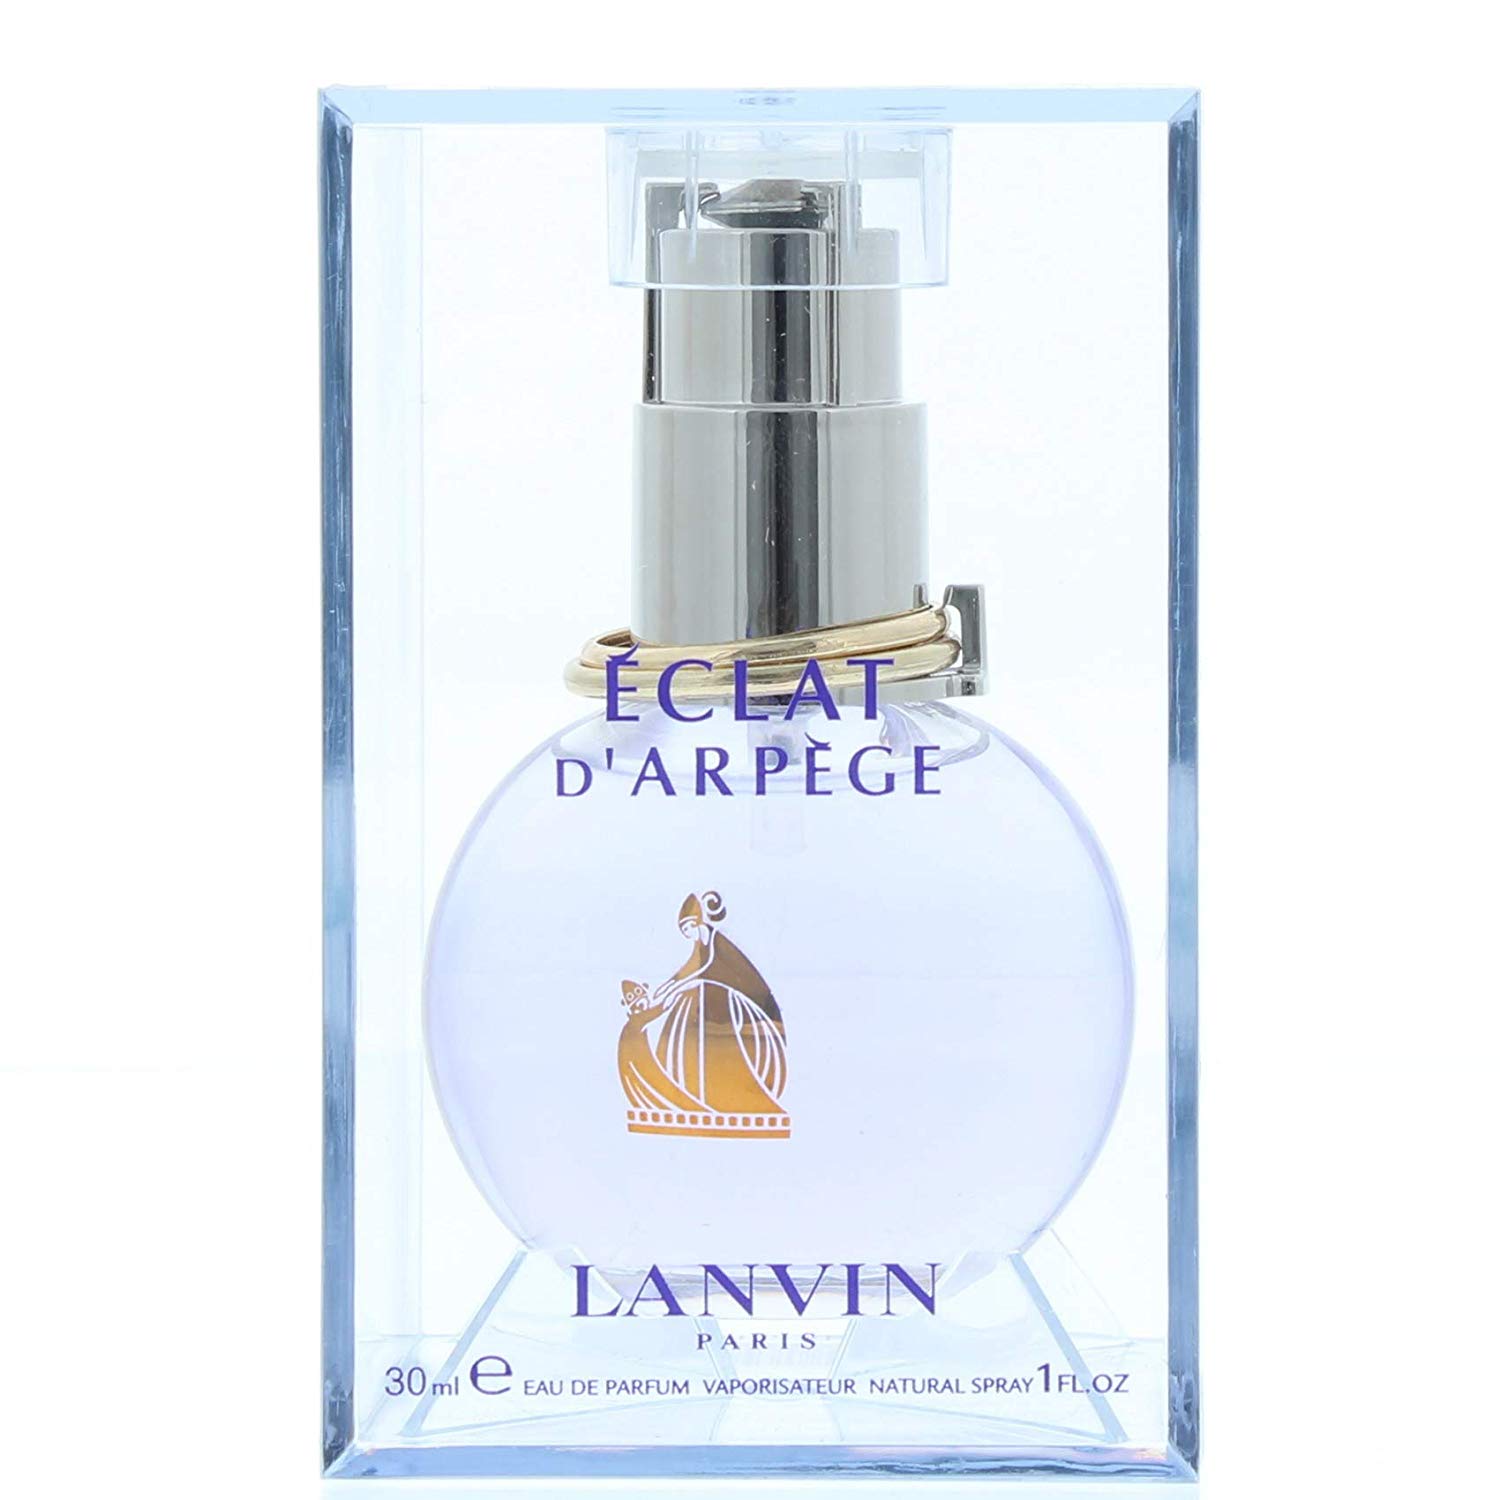 Lanvin Eclat dArpege Eau de Parfum 30ml Spray